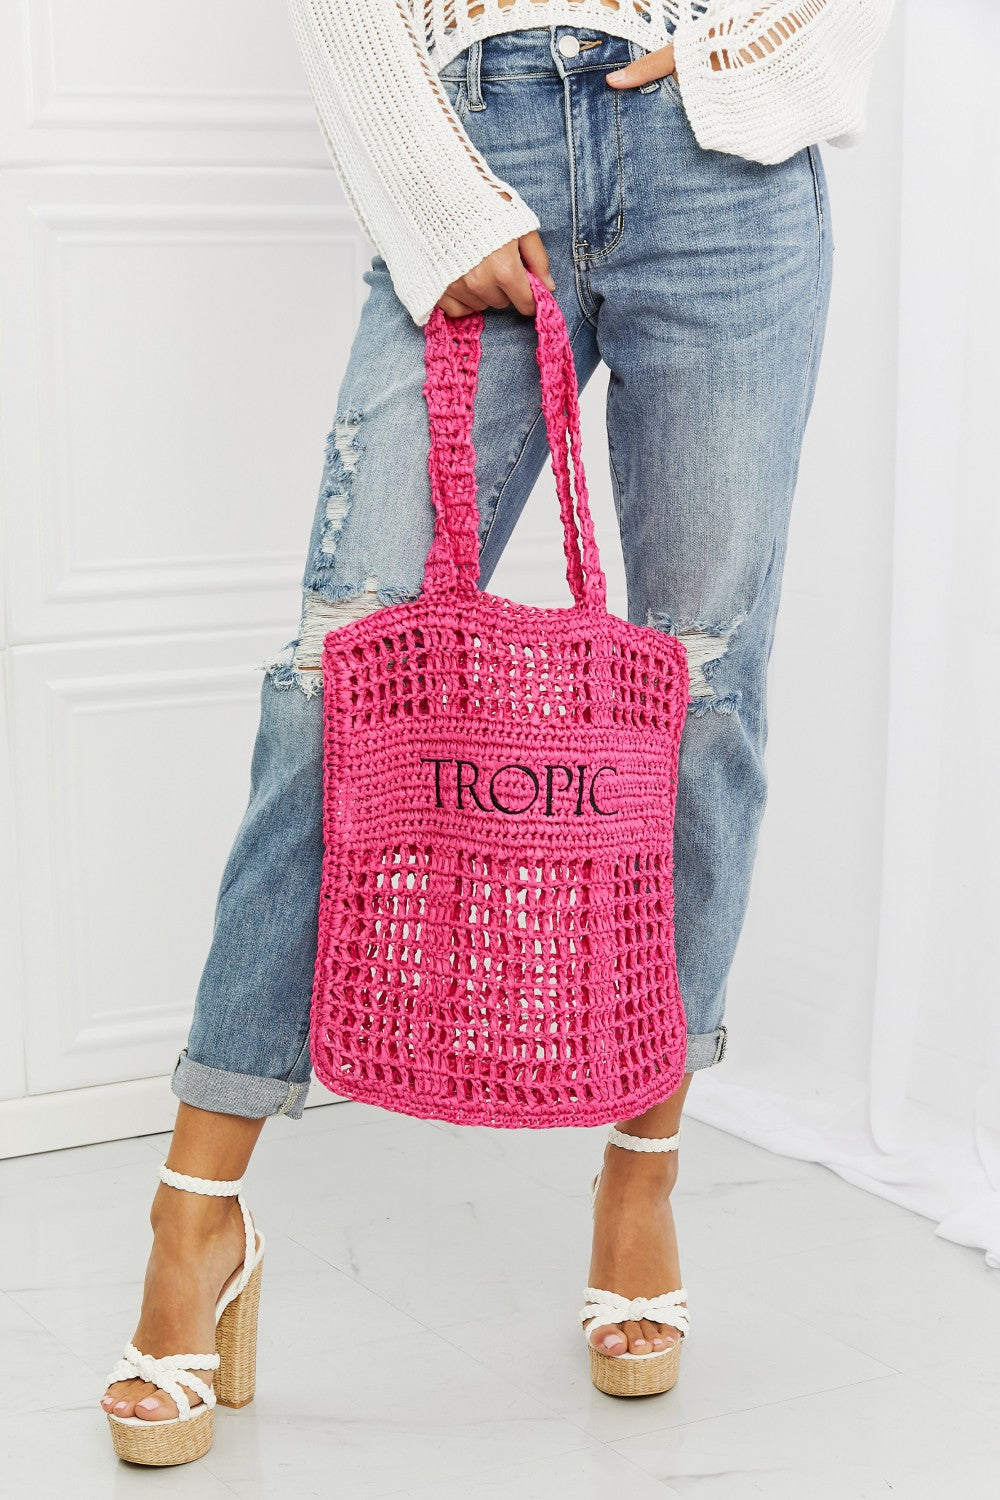 Fame Tropic Babe Straw Tote Bag